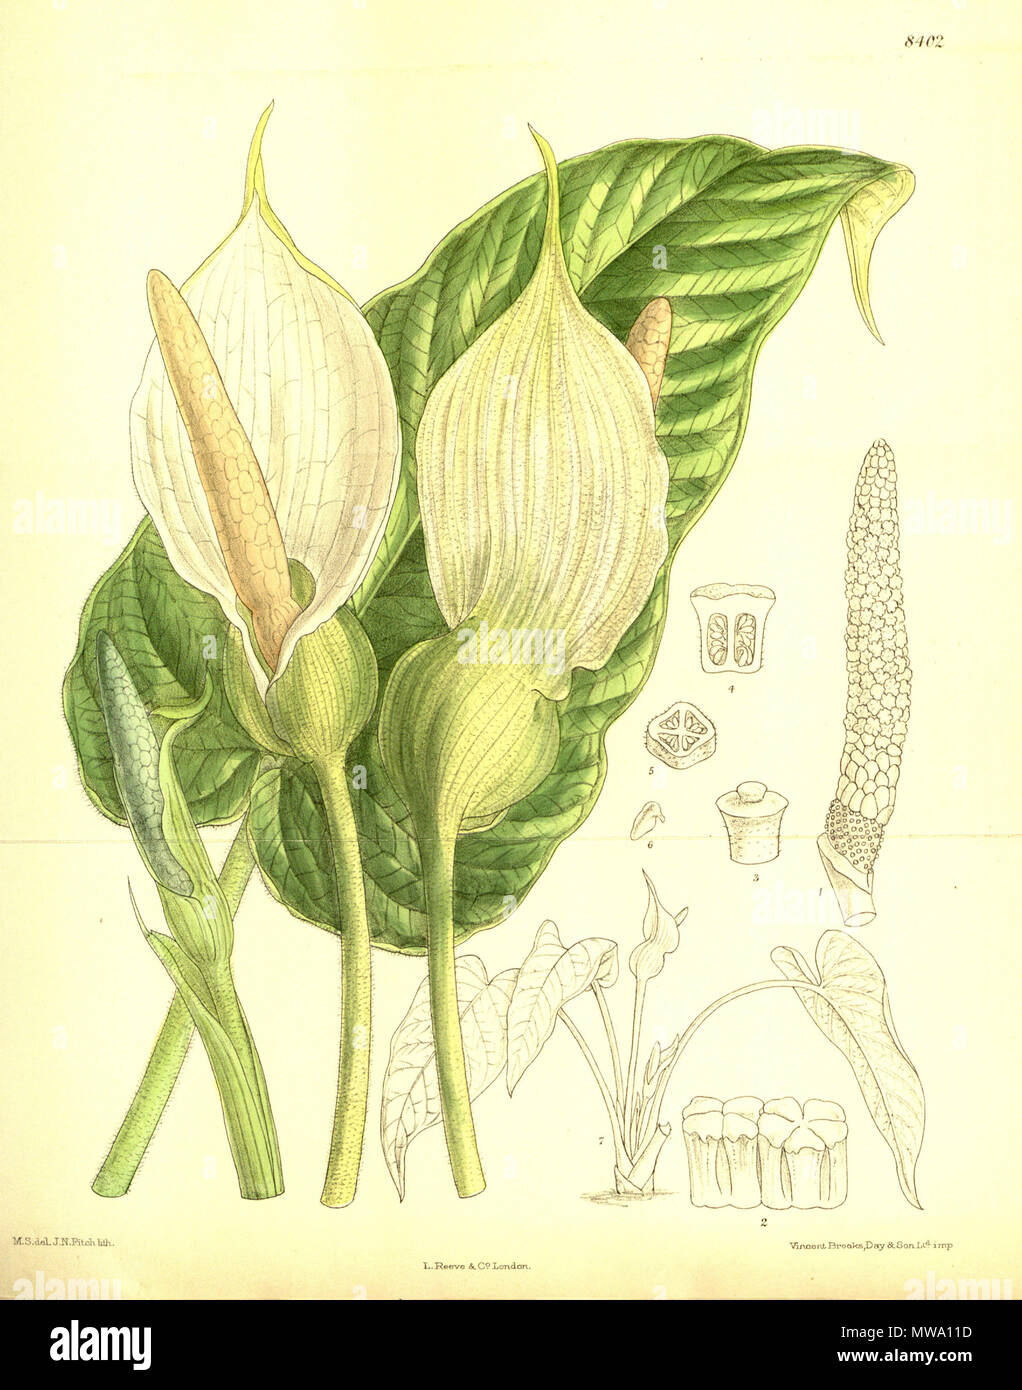 . Caladium pubescens (= Xanthosoma pubescens), Araceae . 1911. M.S. del., J.N.Fitch lith. 108 Caladium pubescens 137-8402 Stock Photo